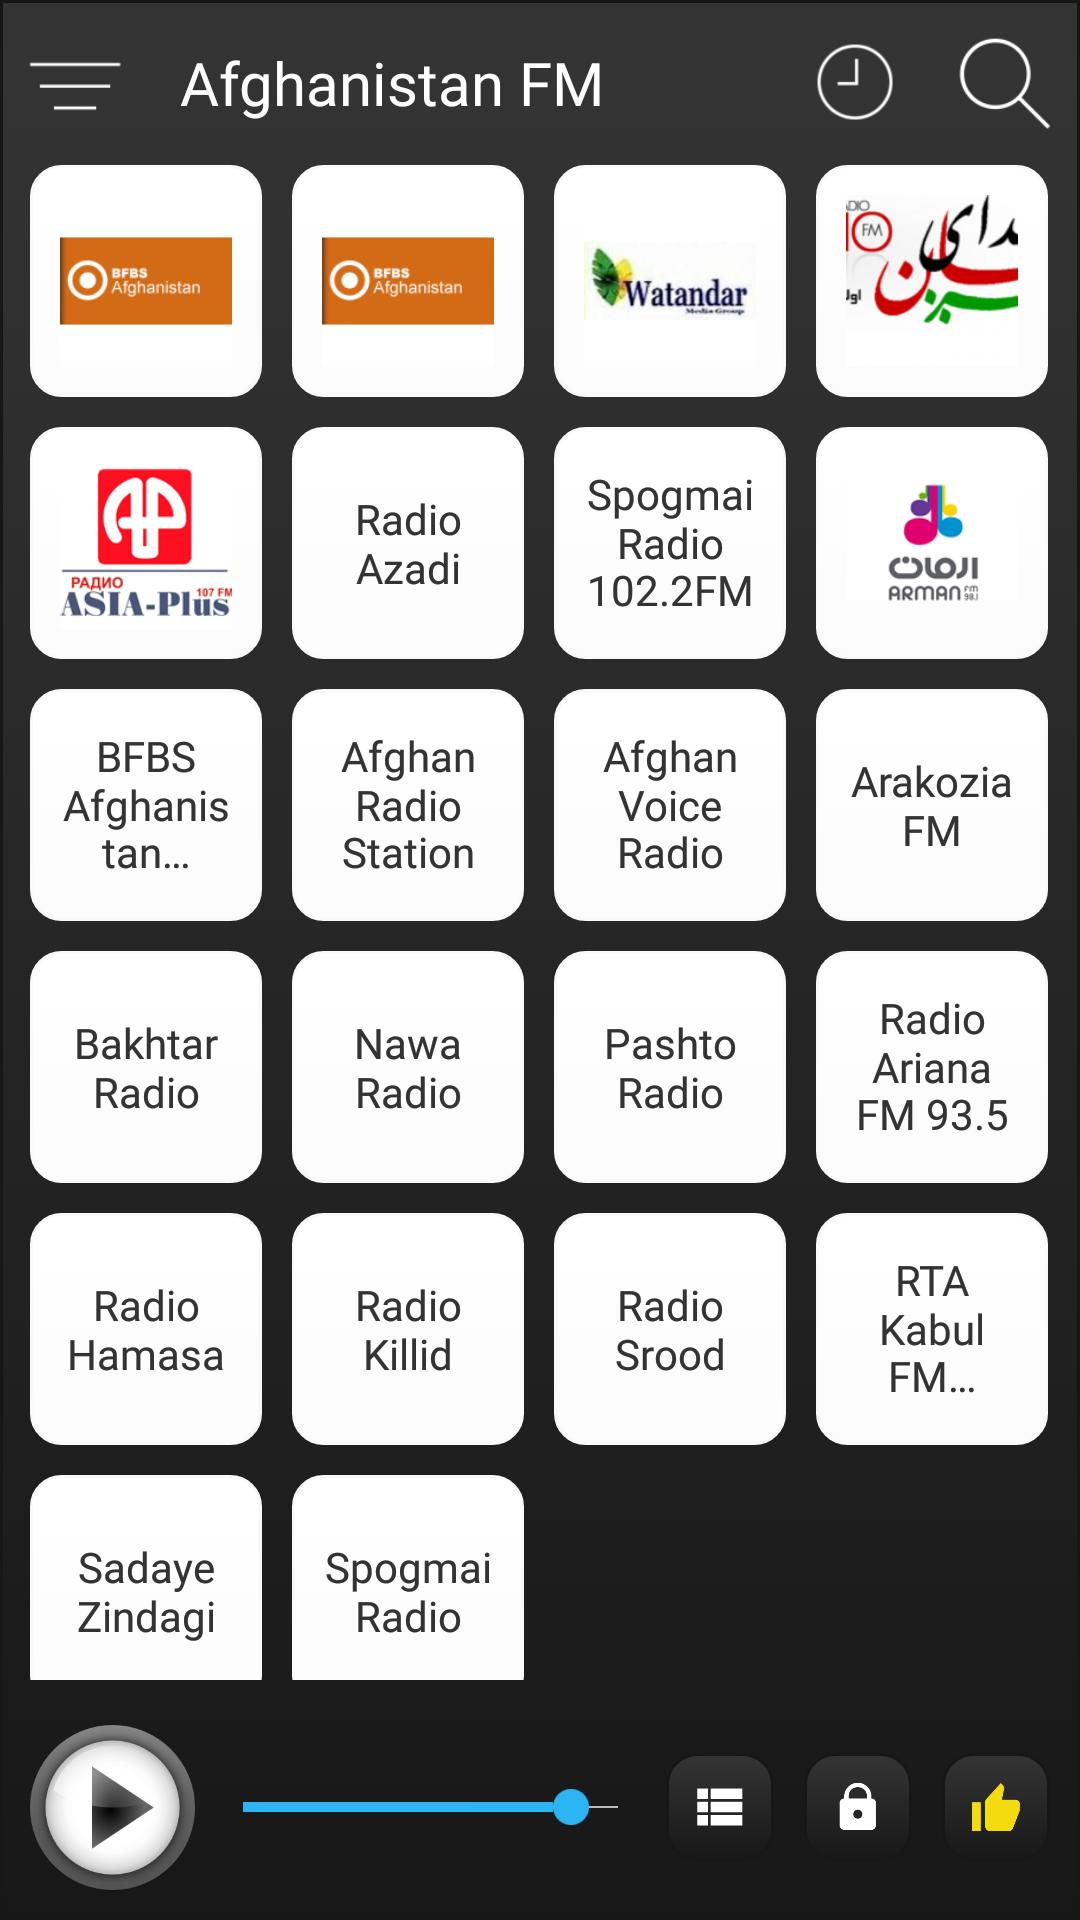 Afghanistan Radio Station - Afghan FM AM Online for Android - APK Download